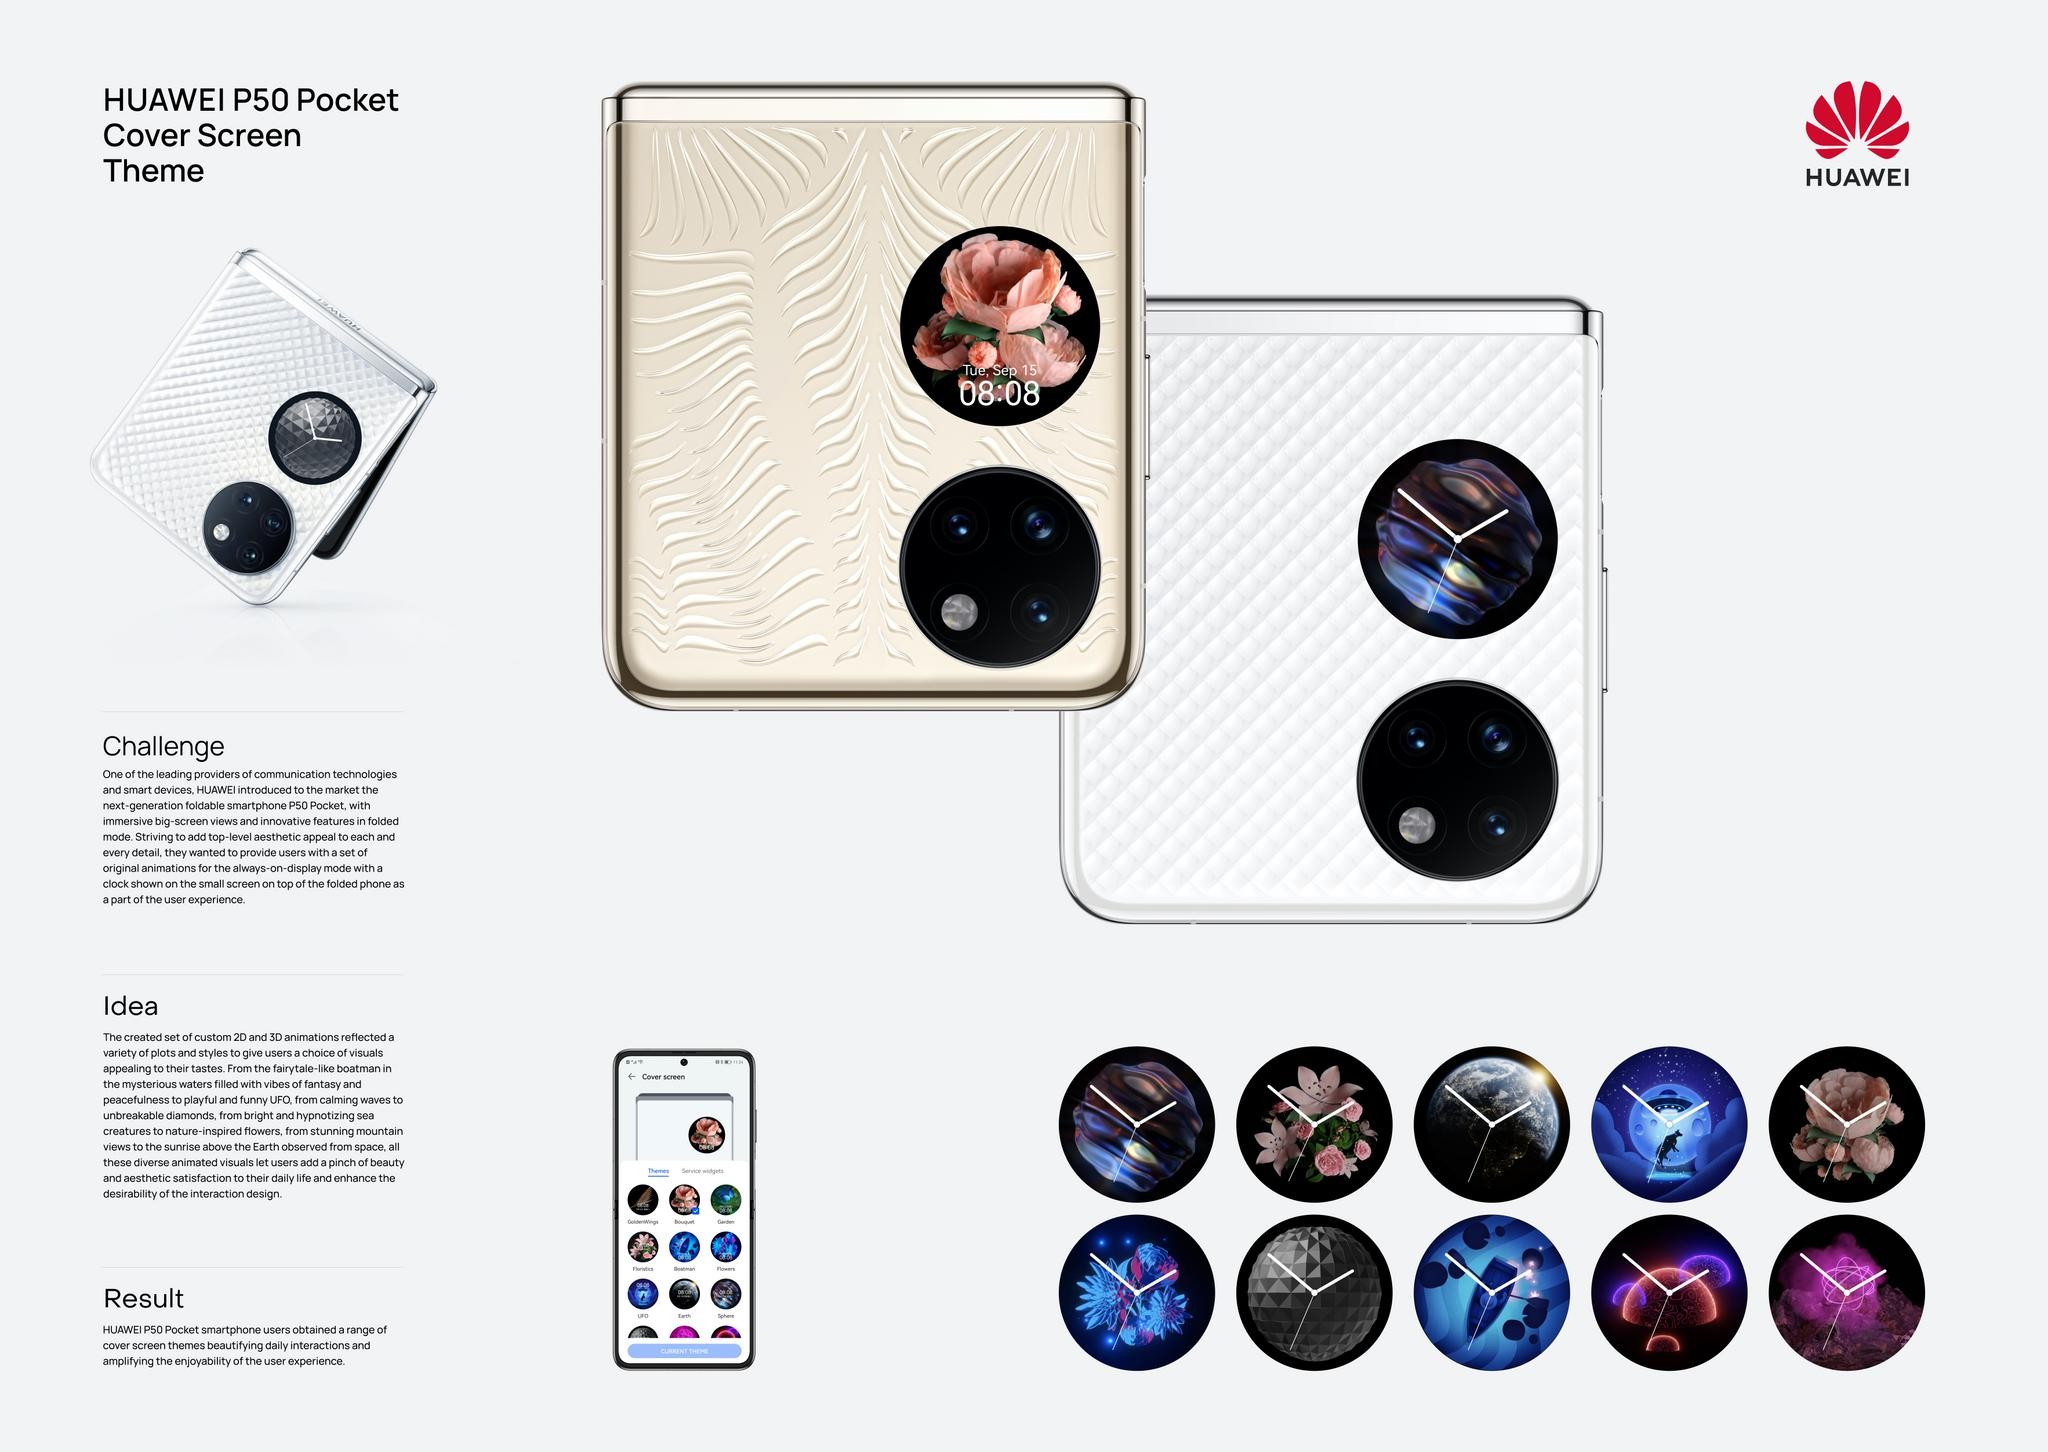 Huawei P50 Pocket Cover Screen Theme